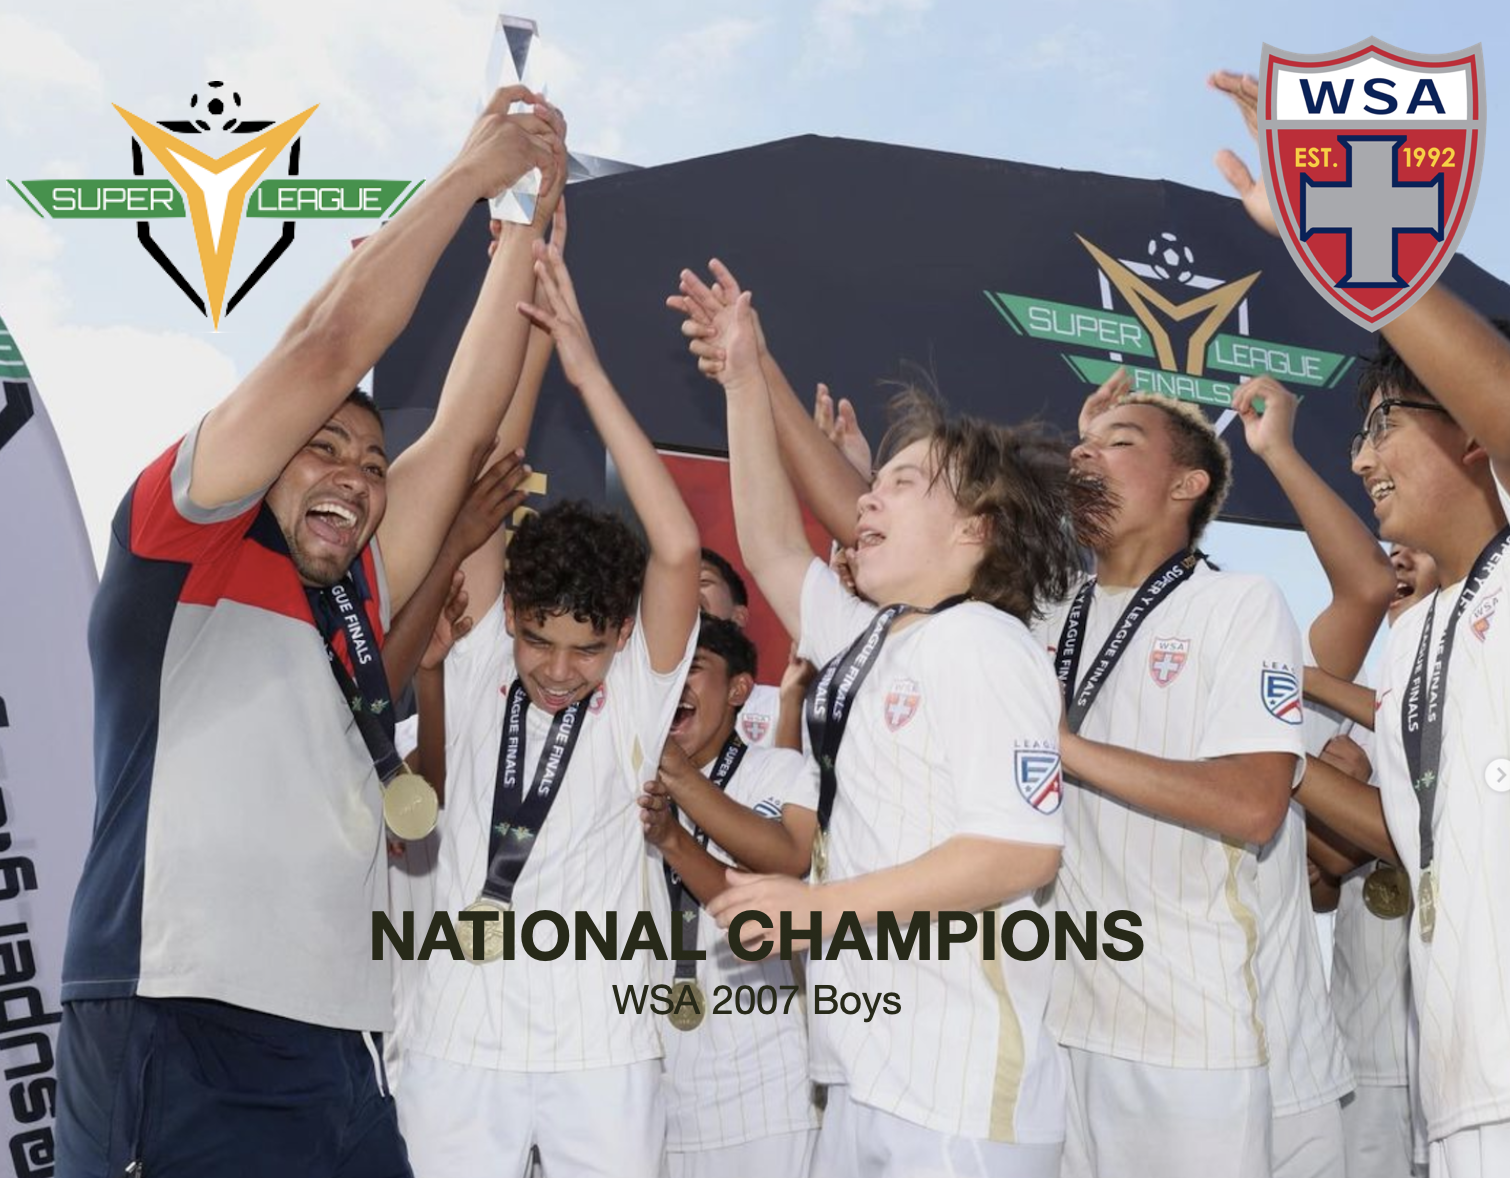 WSA 2007 BOYS NATIONAL CHAMPIONS